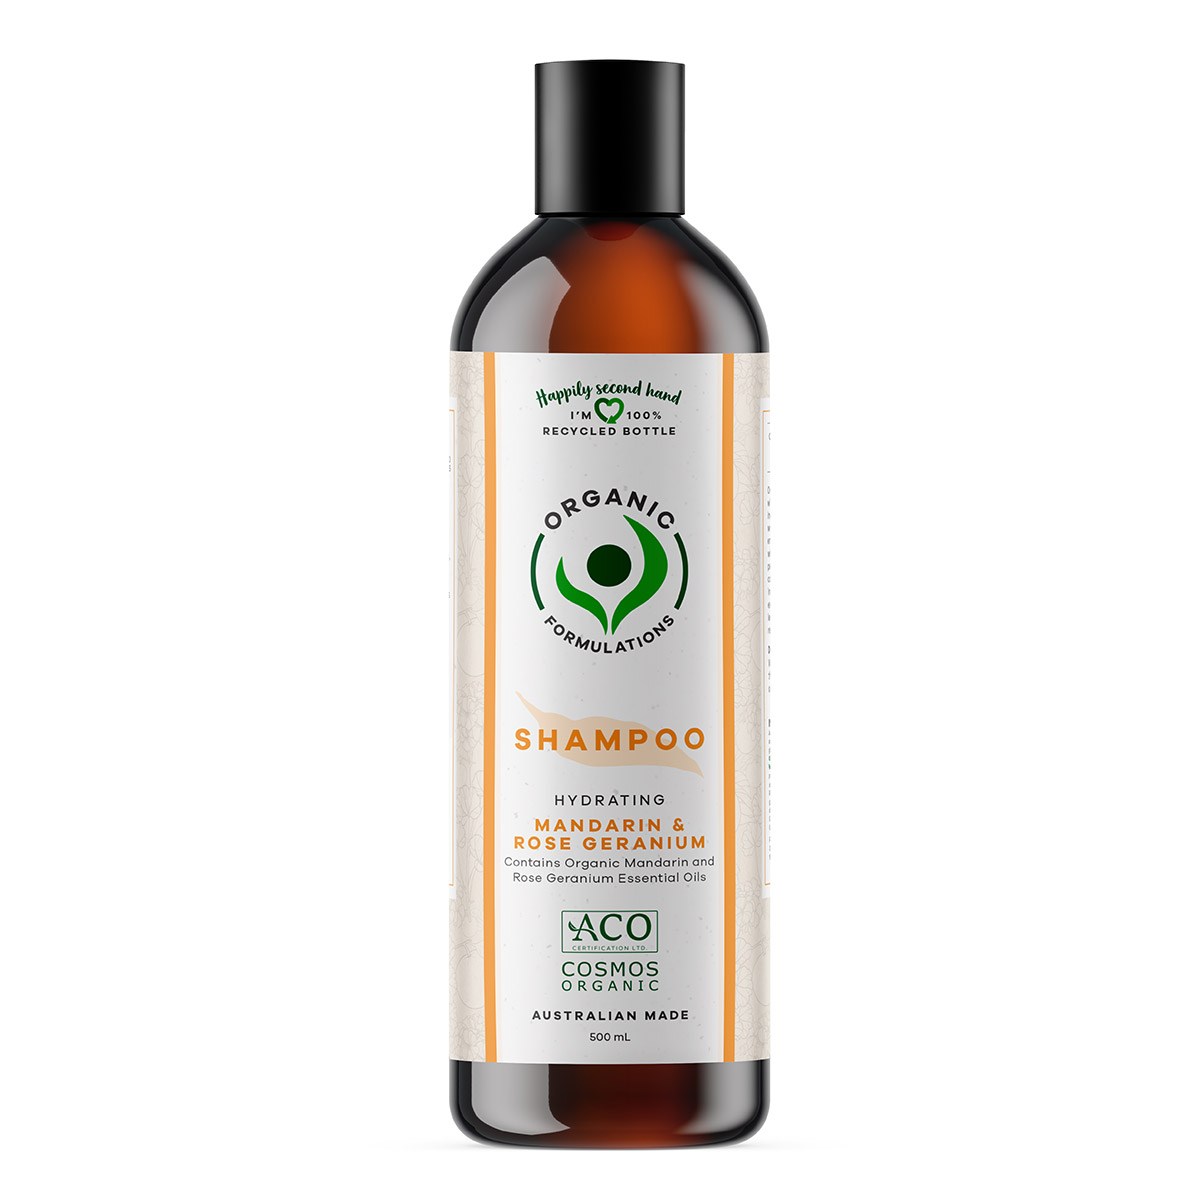 Organic Formulations Shampoo - Hydrating Mandarin Rose Geranium